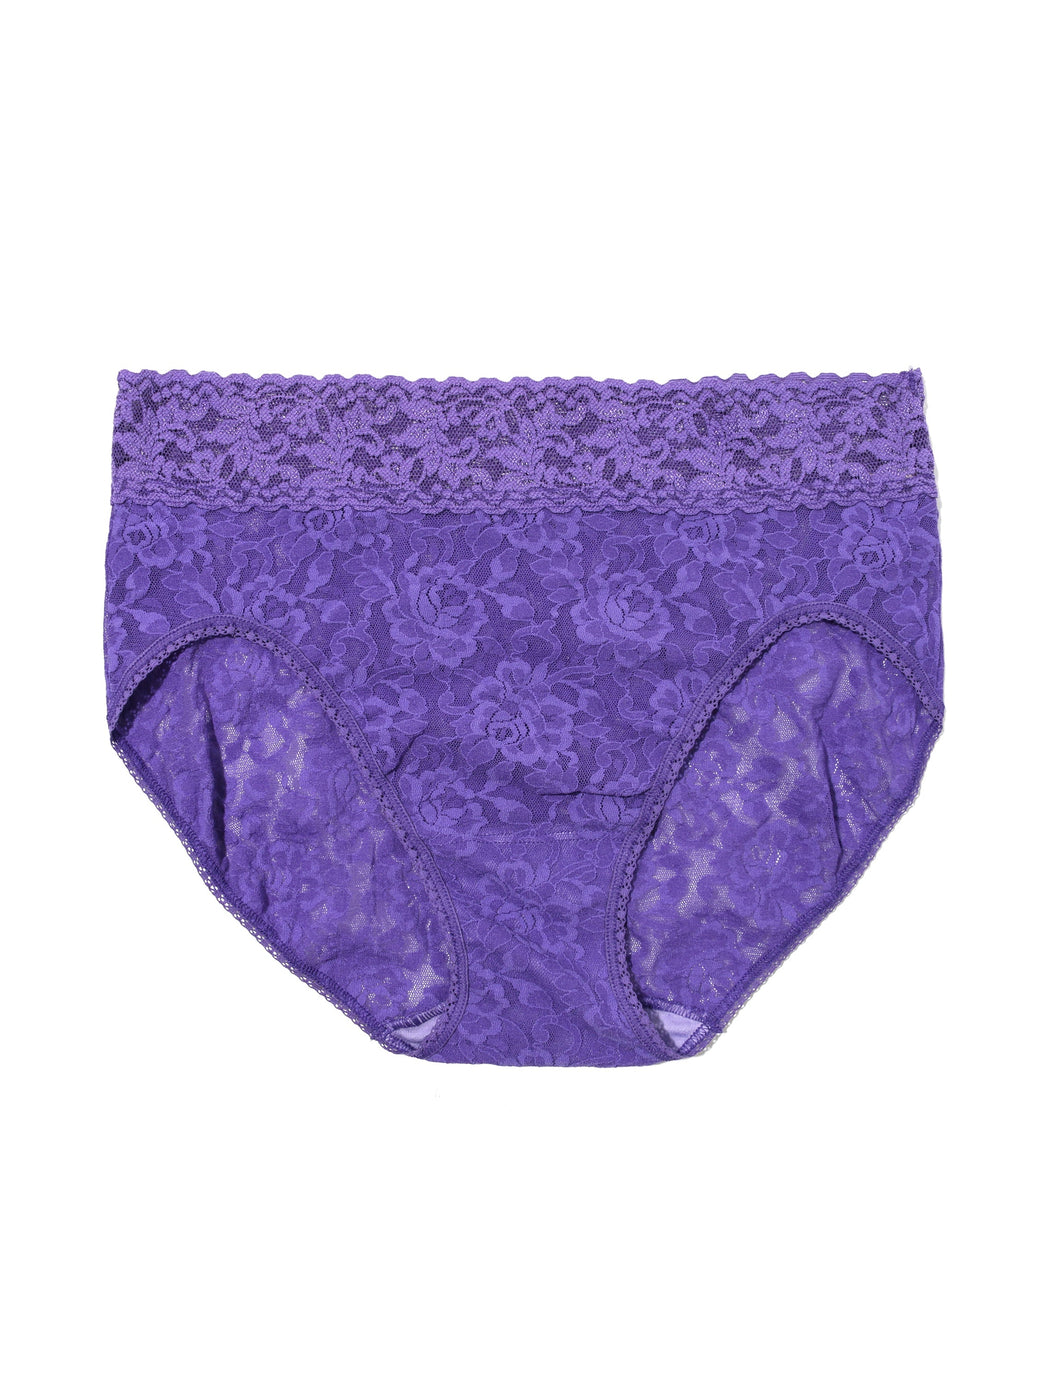 Signature Lace French Brief Wild Violet Purple Sale